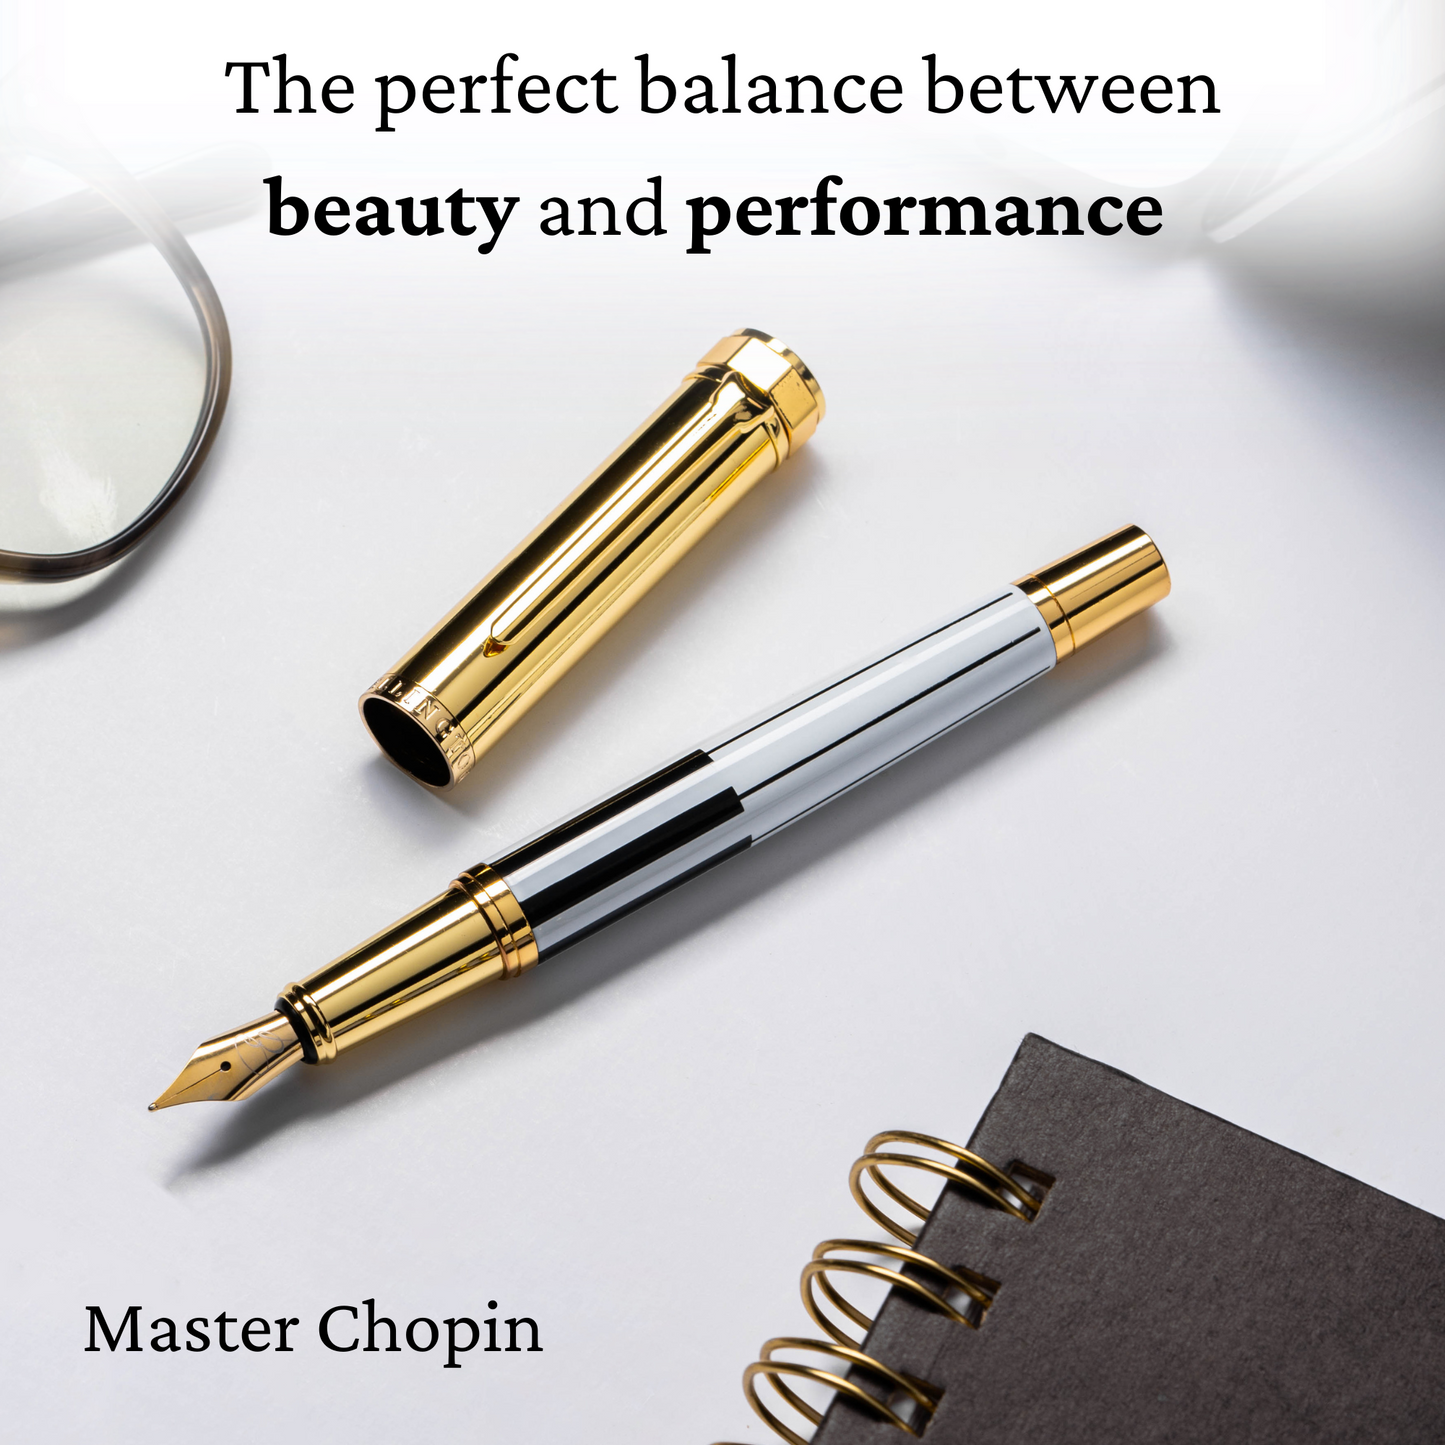 Master Chopin Fountain Pen